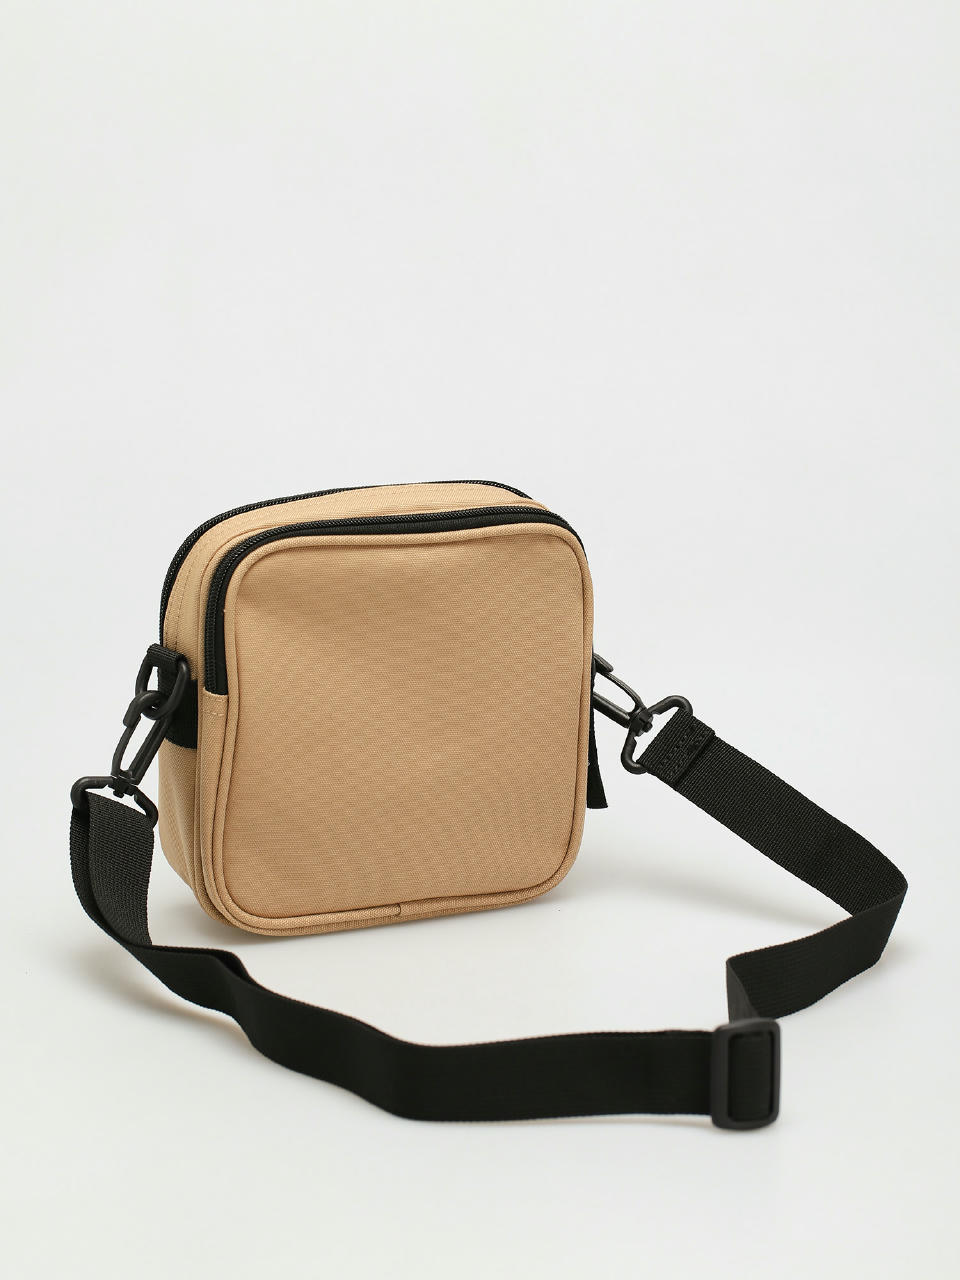 Carhartt Wip Essentials Brown Crossbody Bag